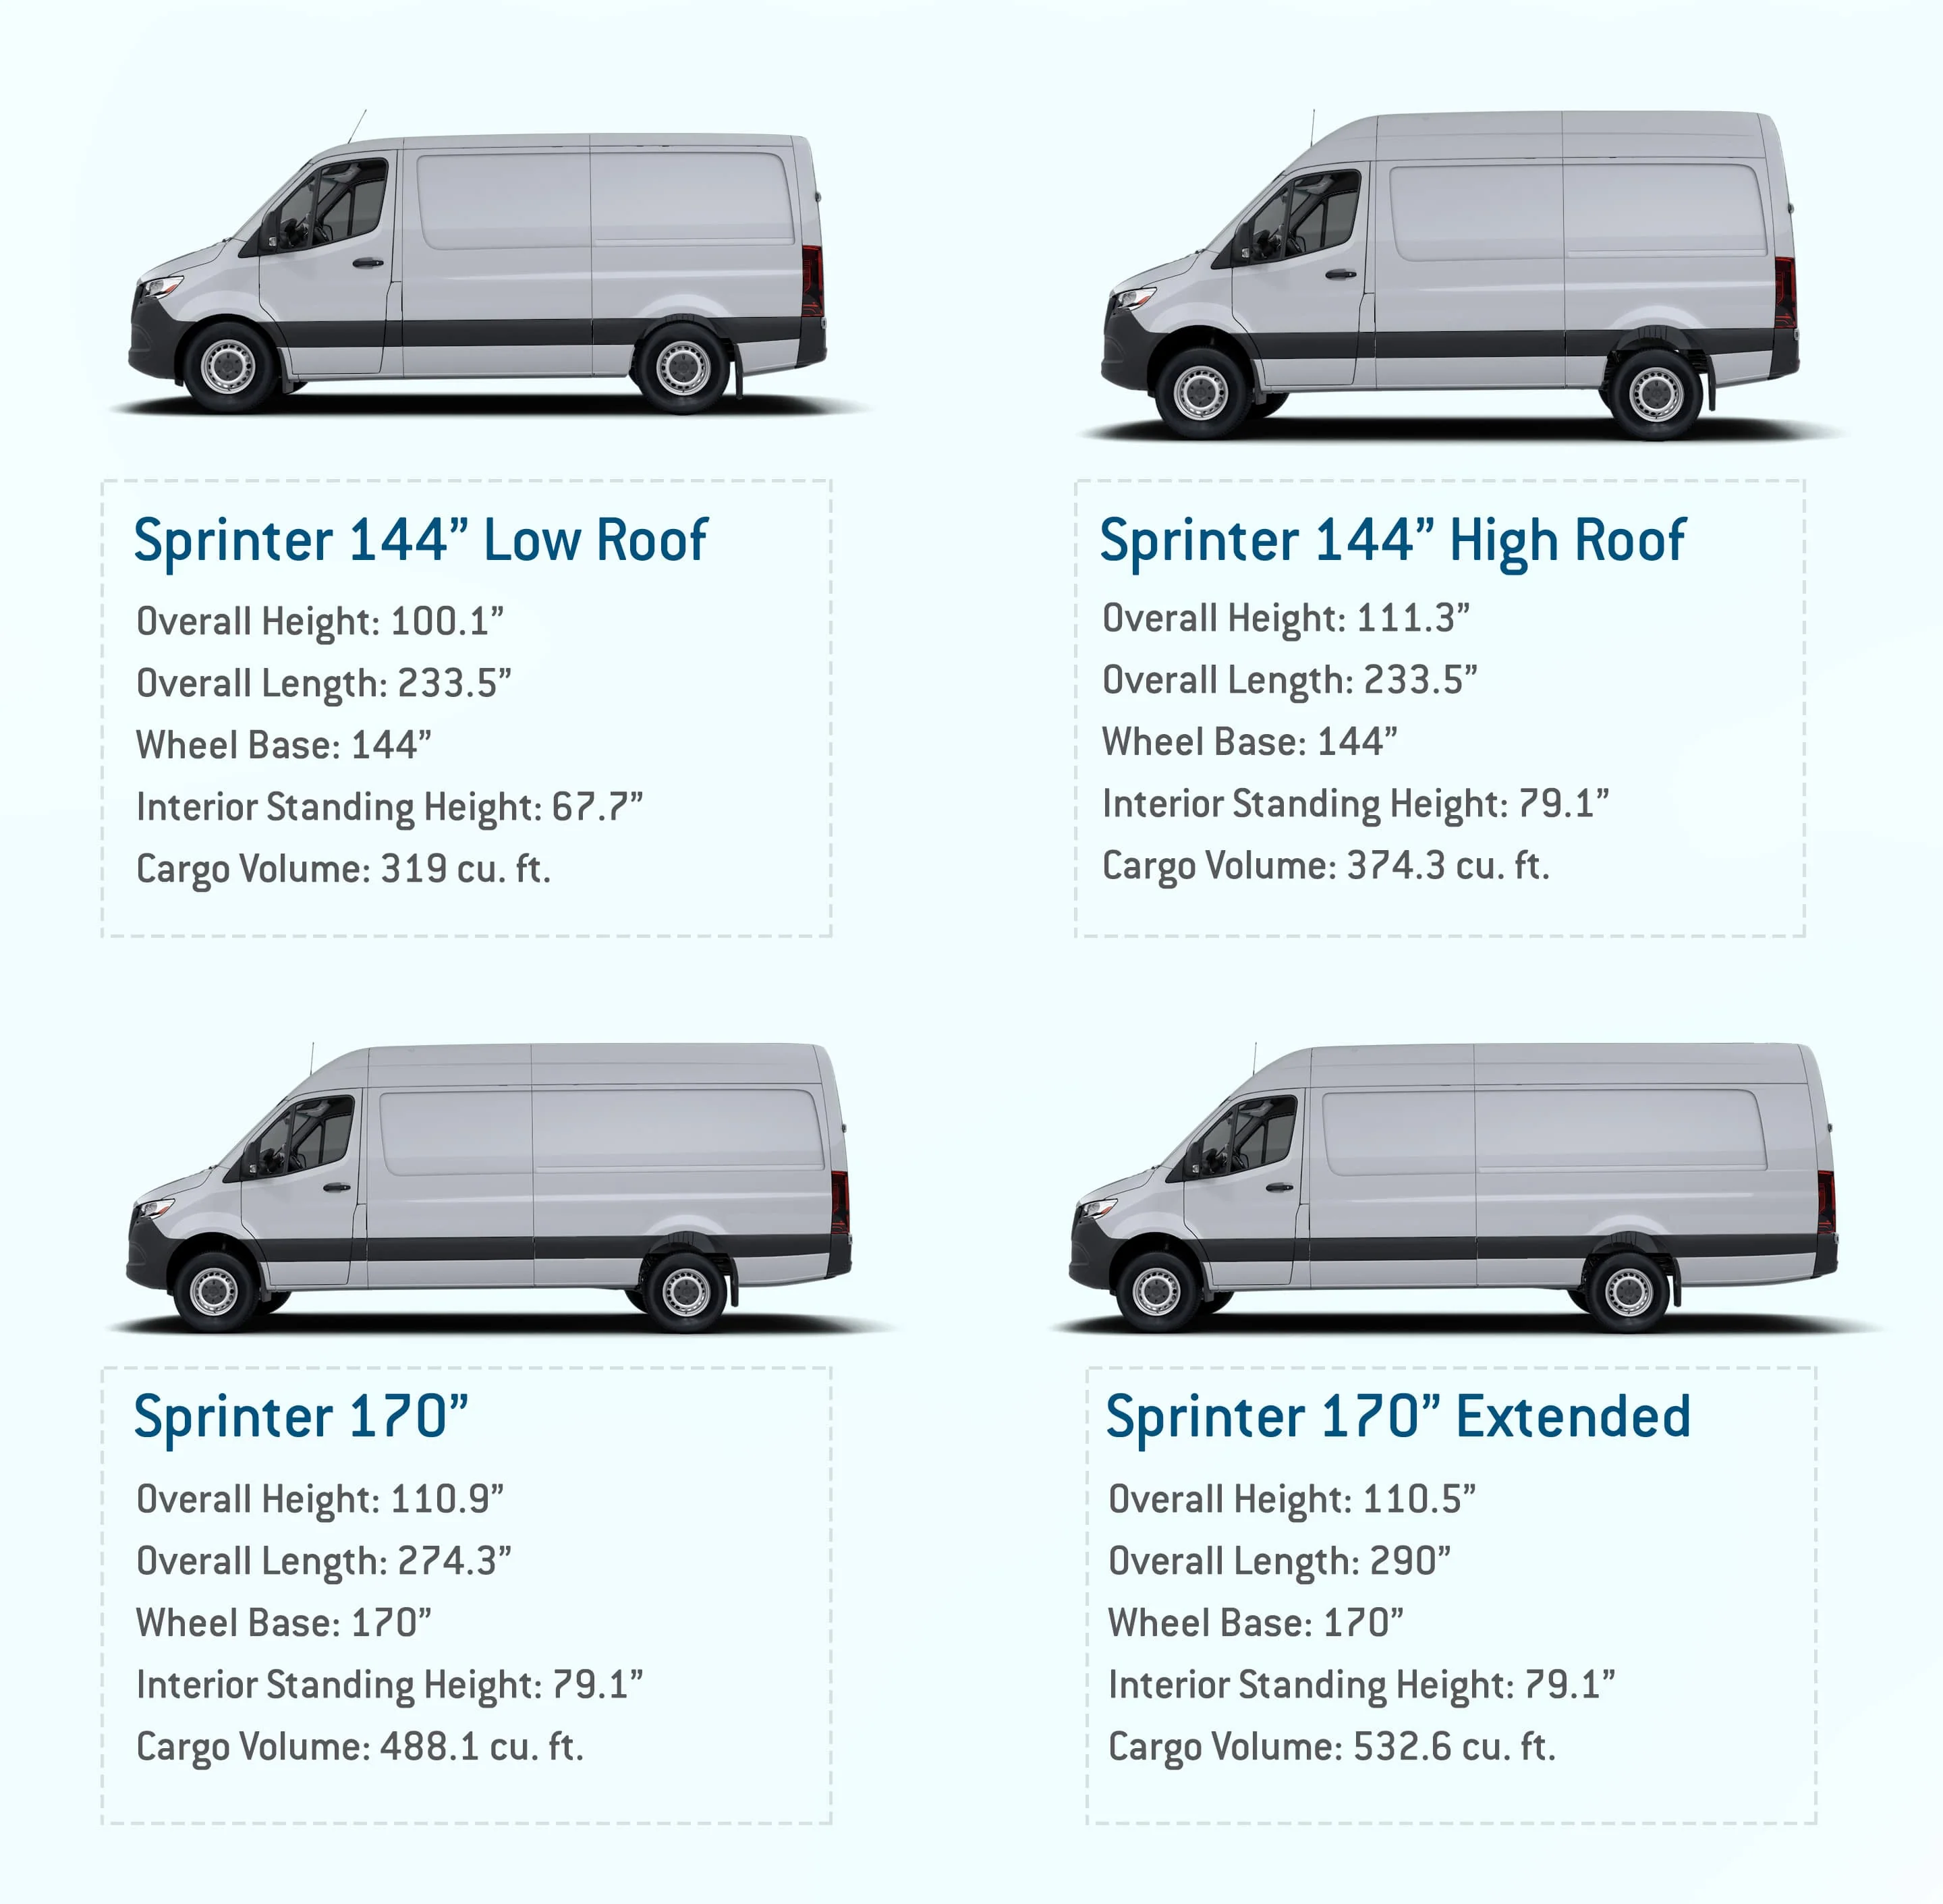 How Long Is a Sprinter Van? Dimensions and Lengths of Mercedes Sprinter Vans